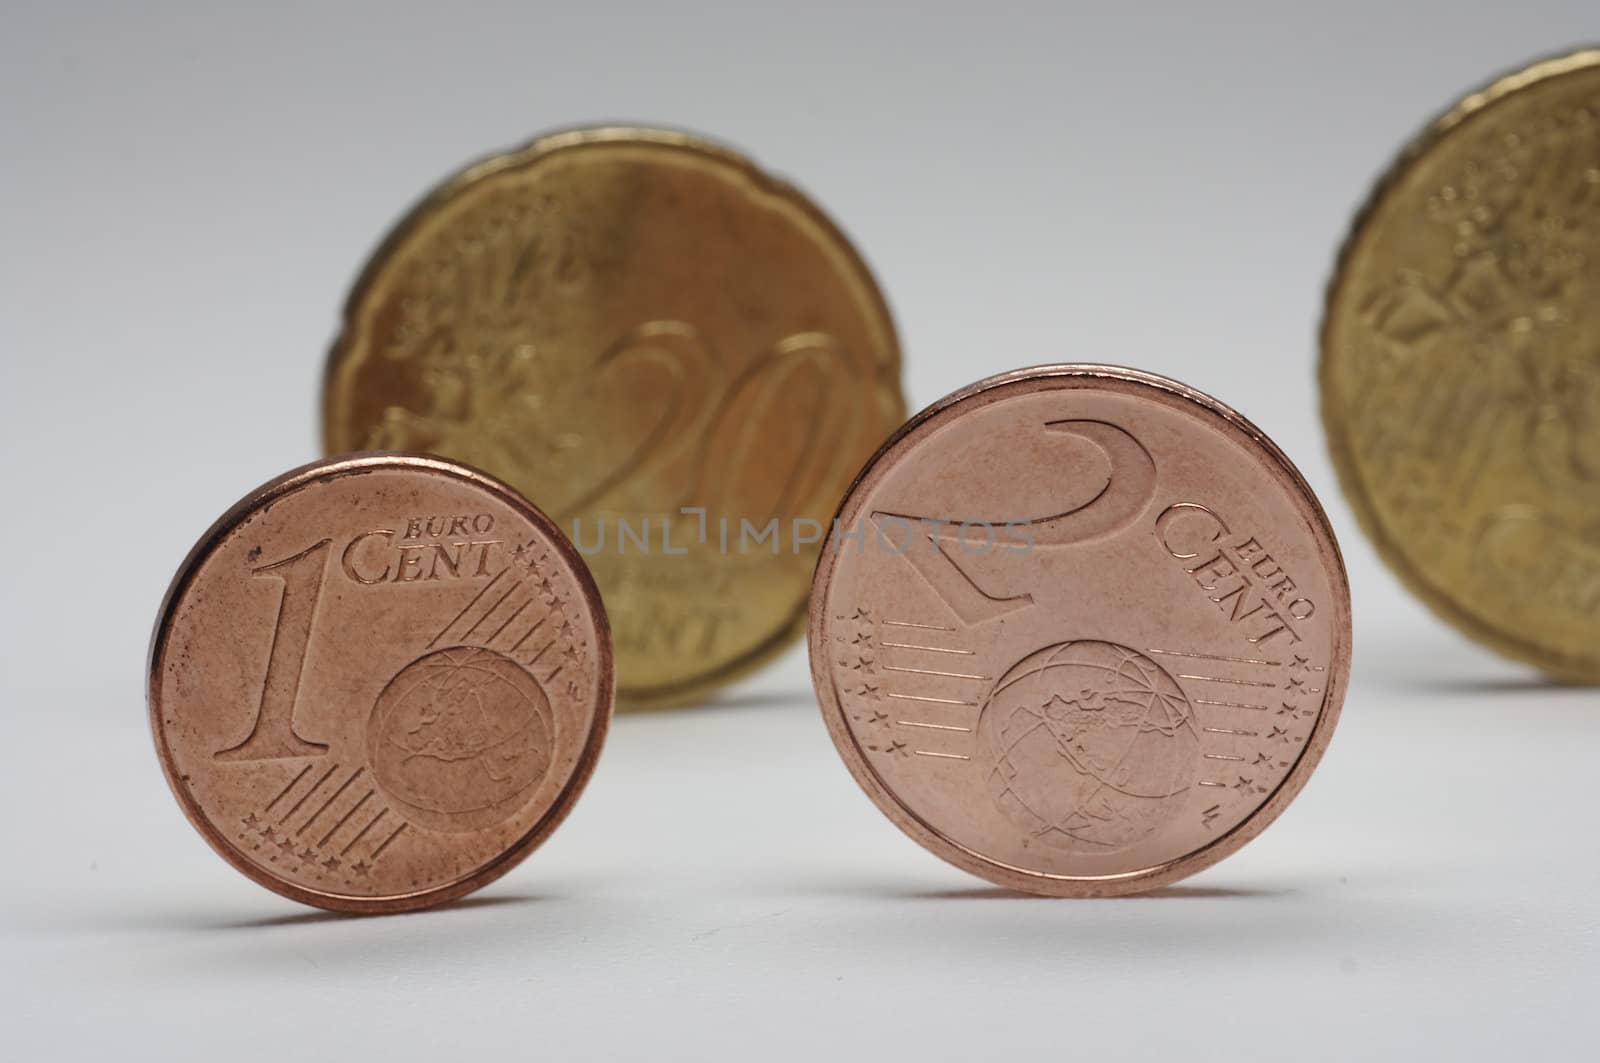 EURO Cents